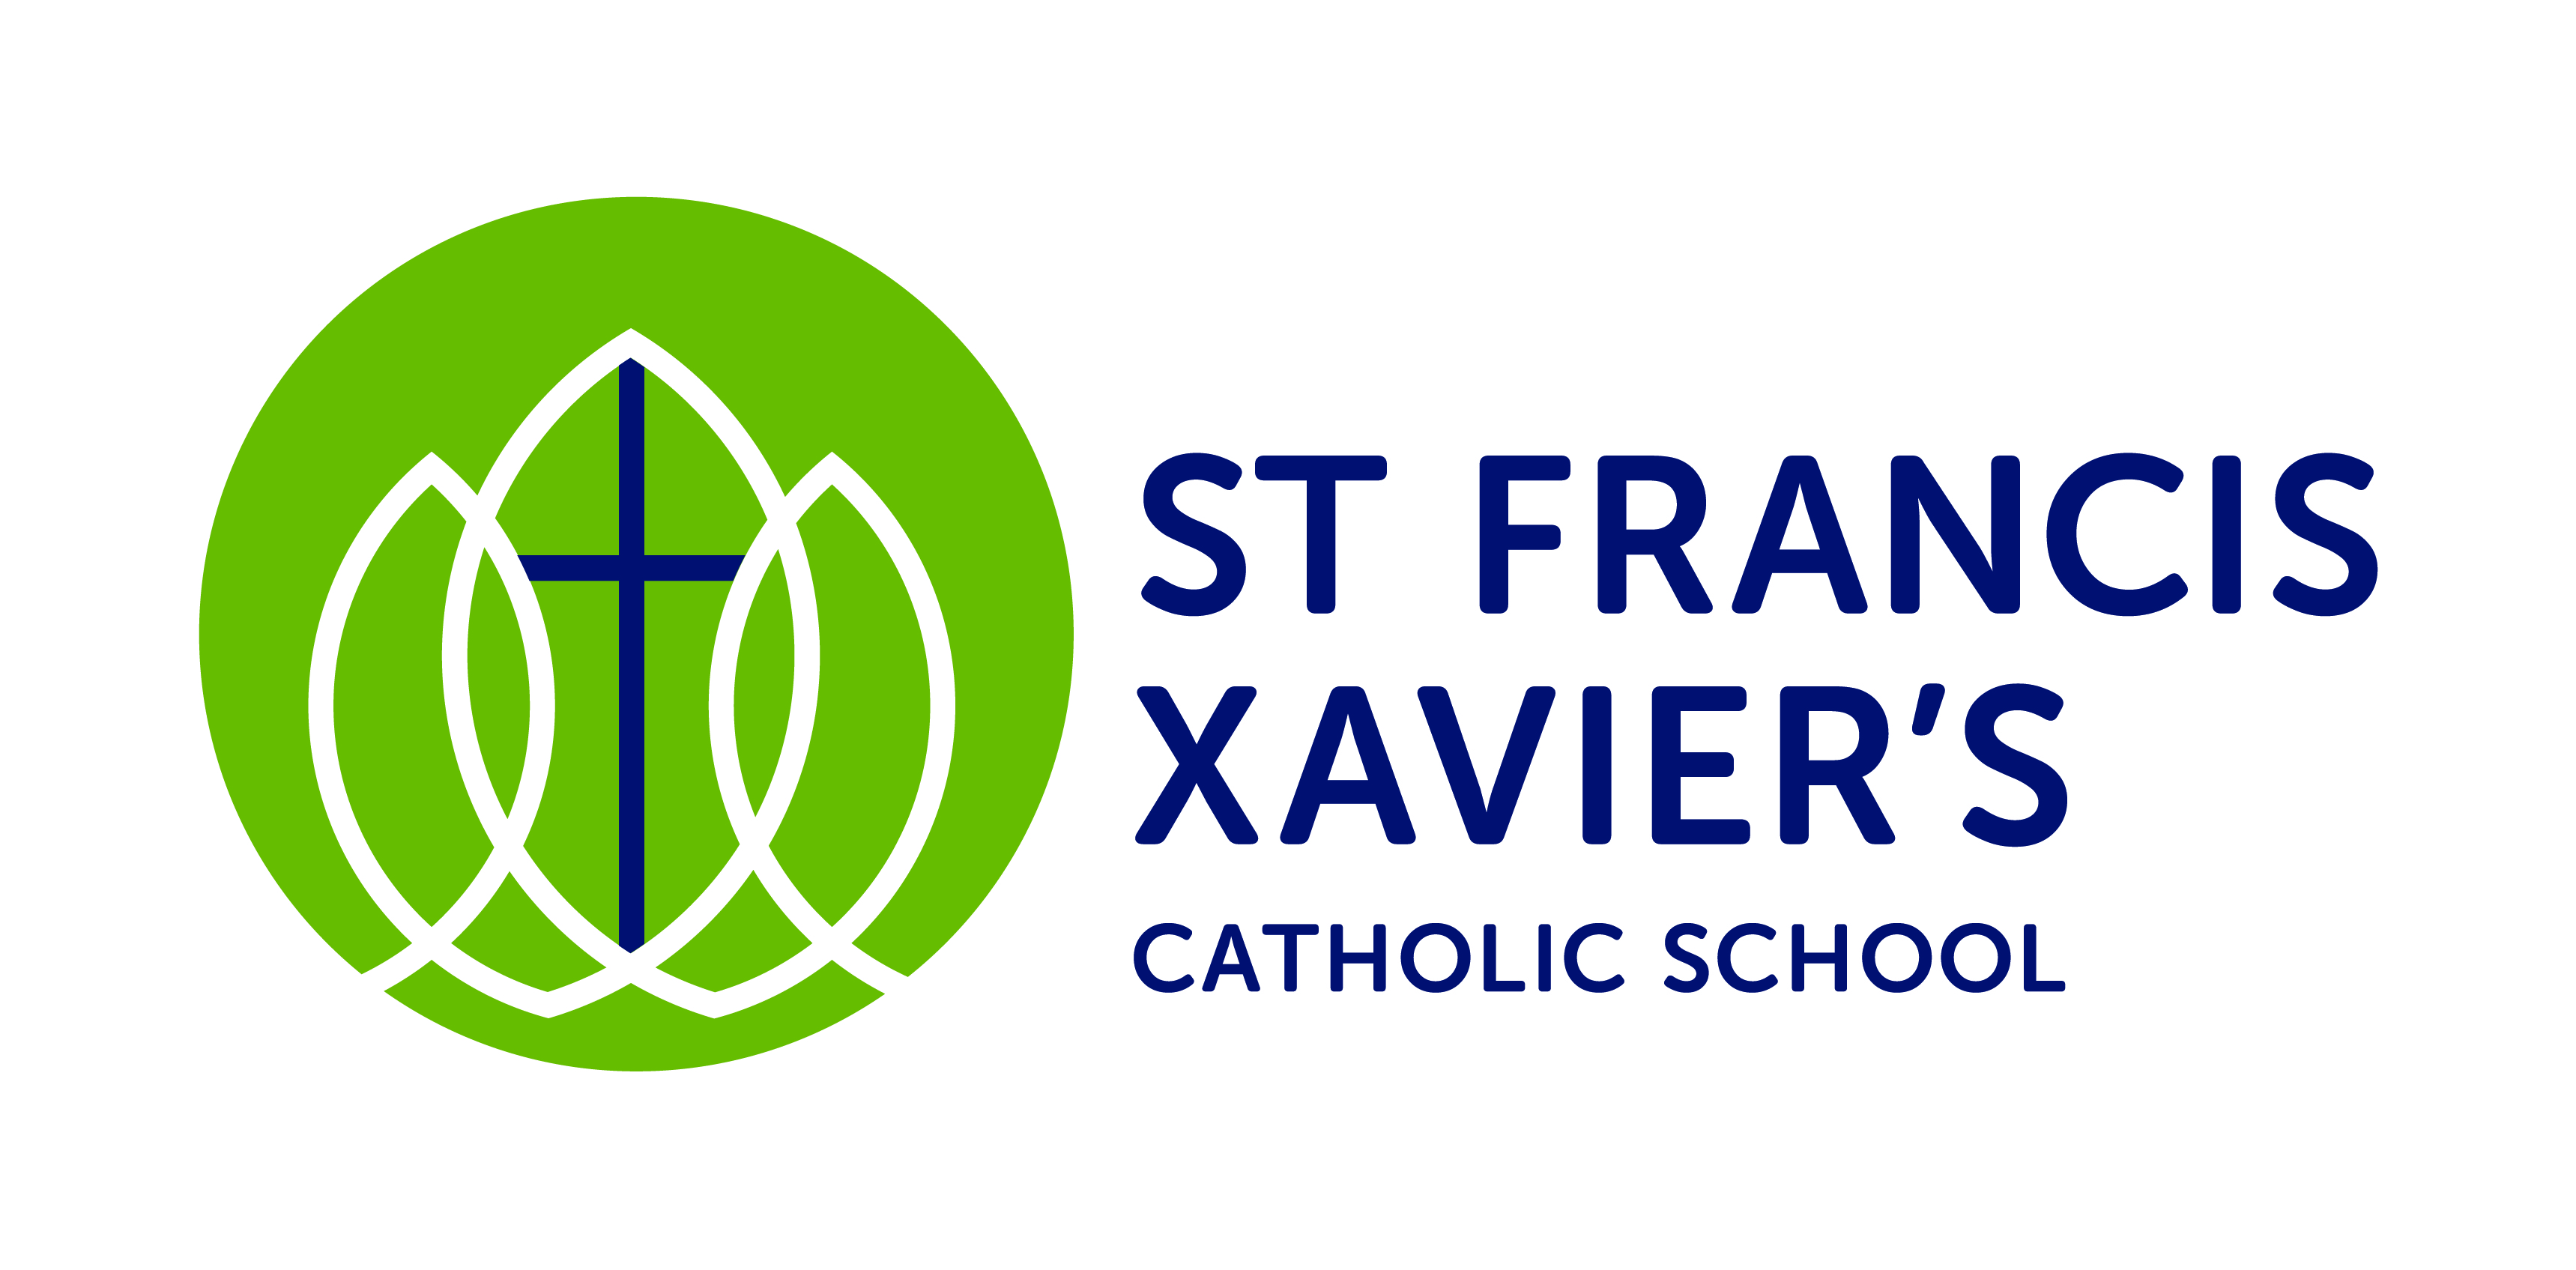 St Francis Xavier's Catholic School 